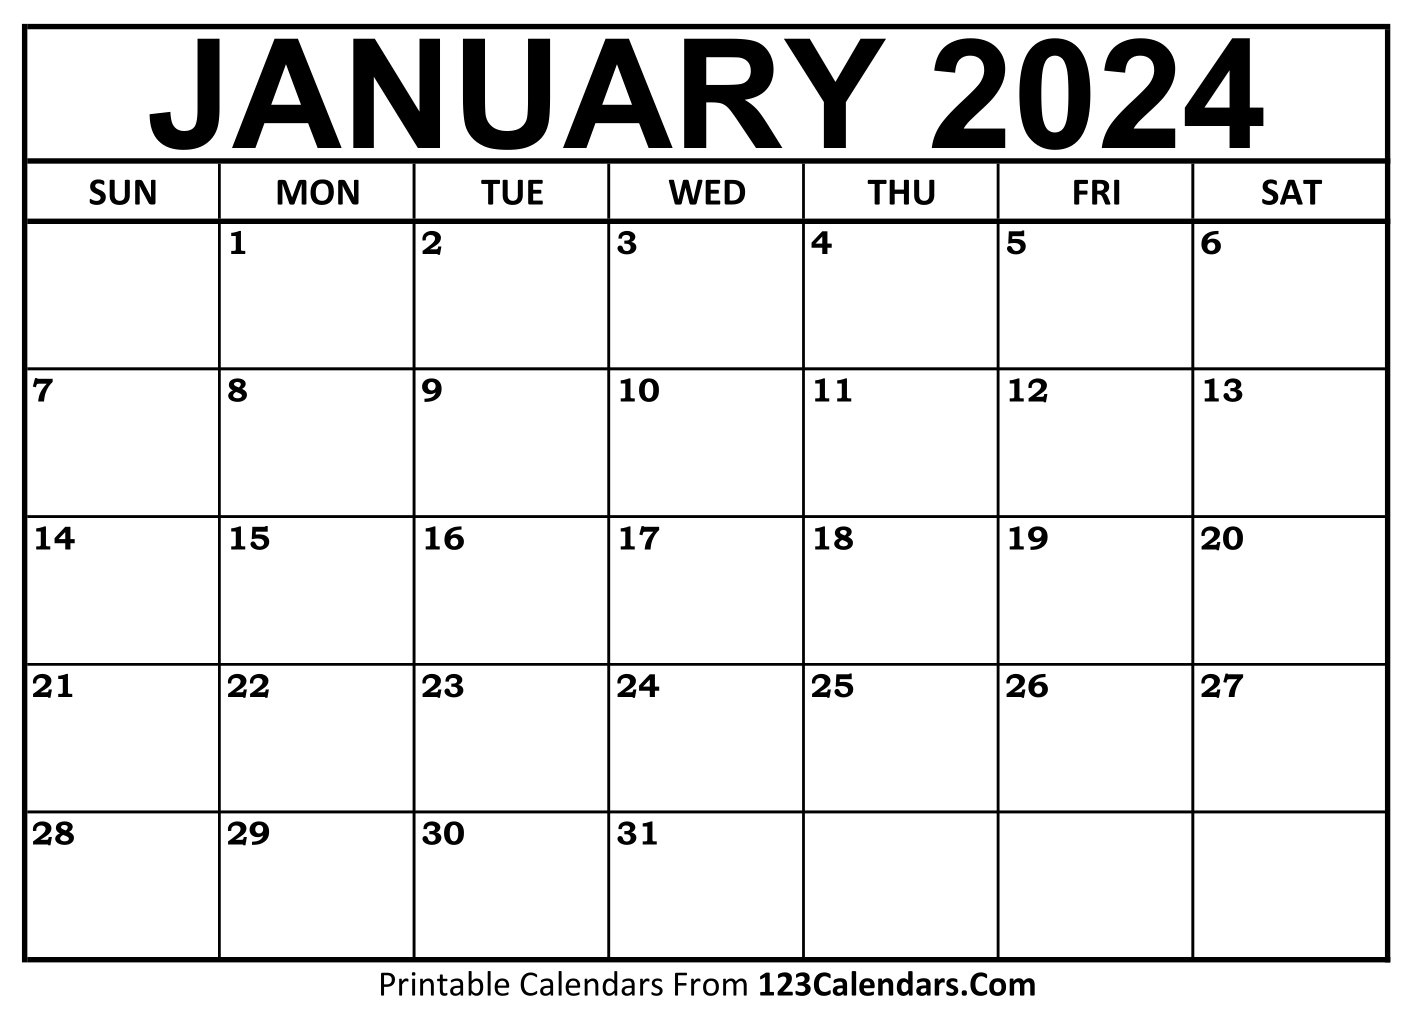 Printable January 2024 Calendar Templates - 123Calendars | Free Printable 2024 Monthly Calendar